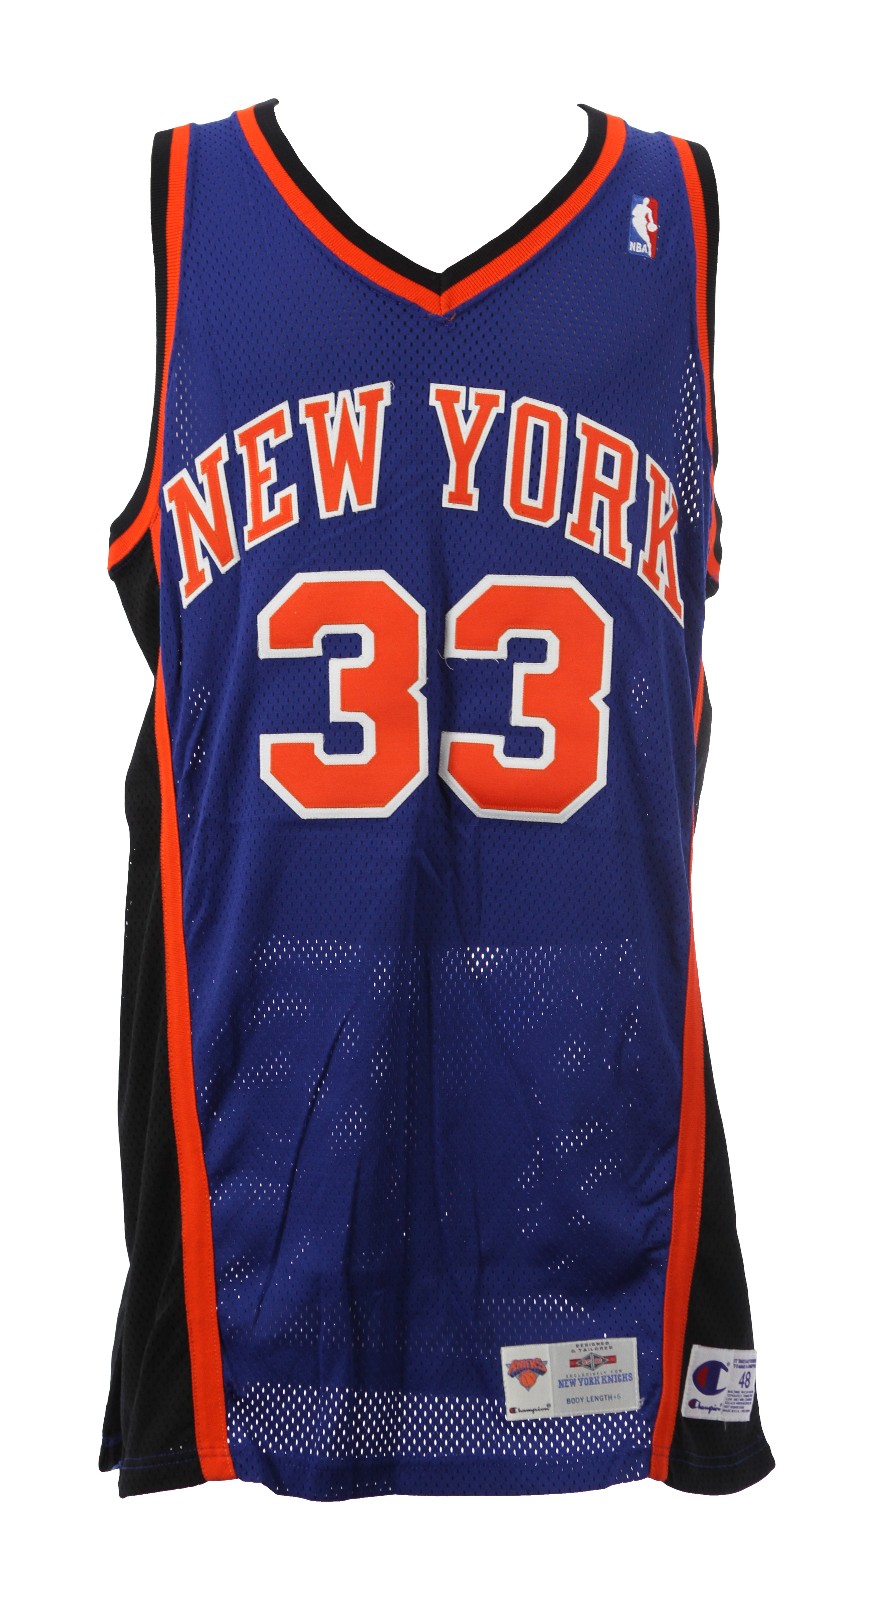 New York Knicks 1995-1997 Alternate Jersey